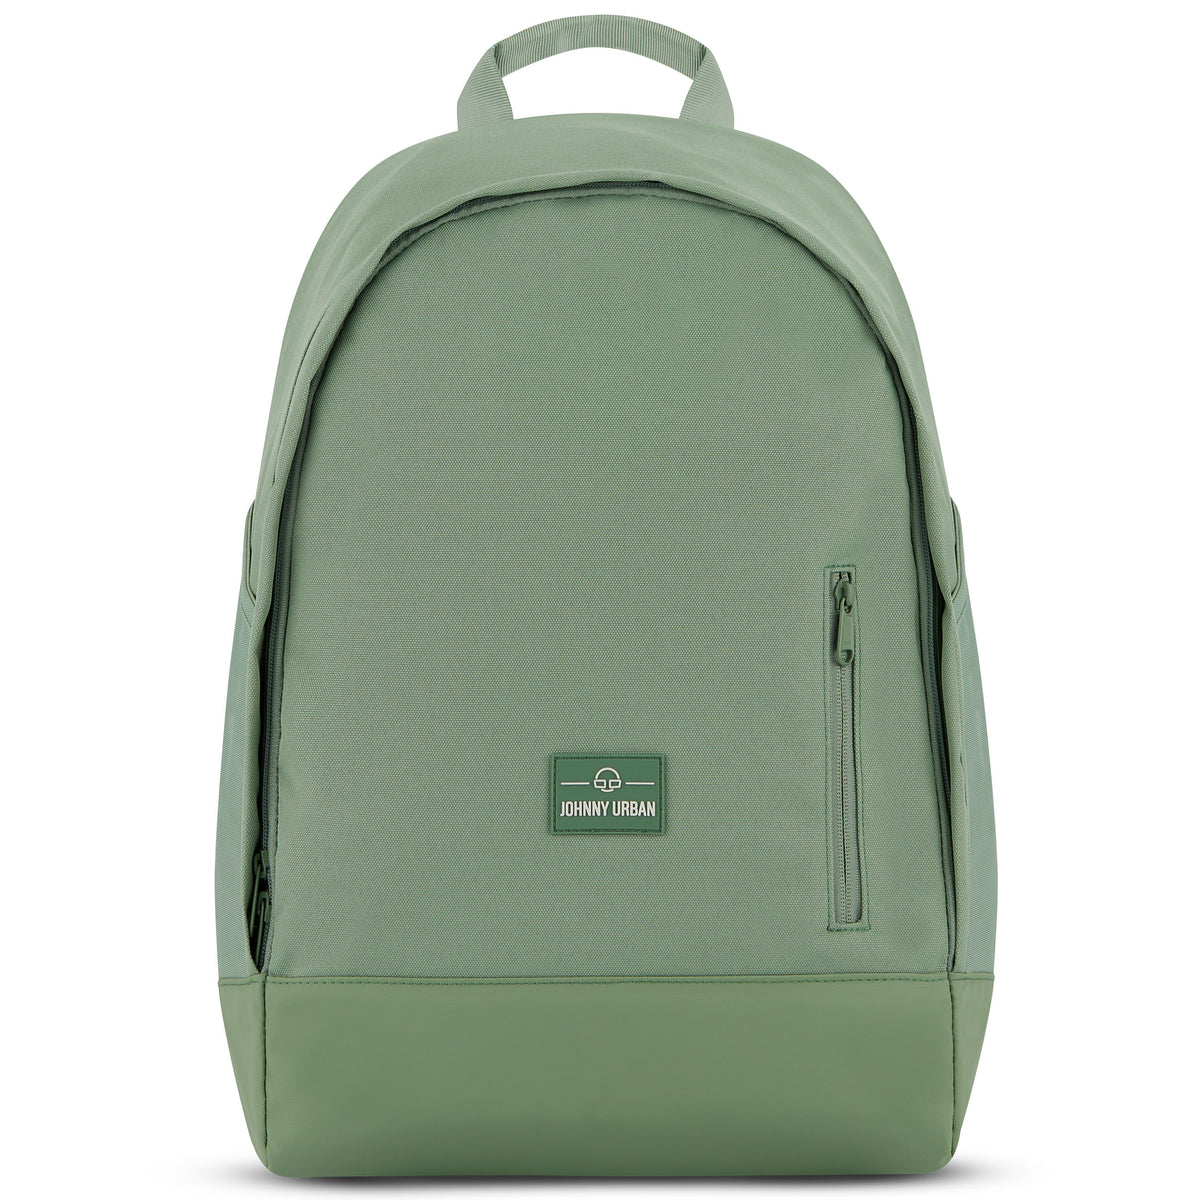 Backpack "Neo"